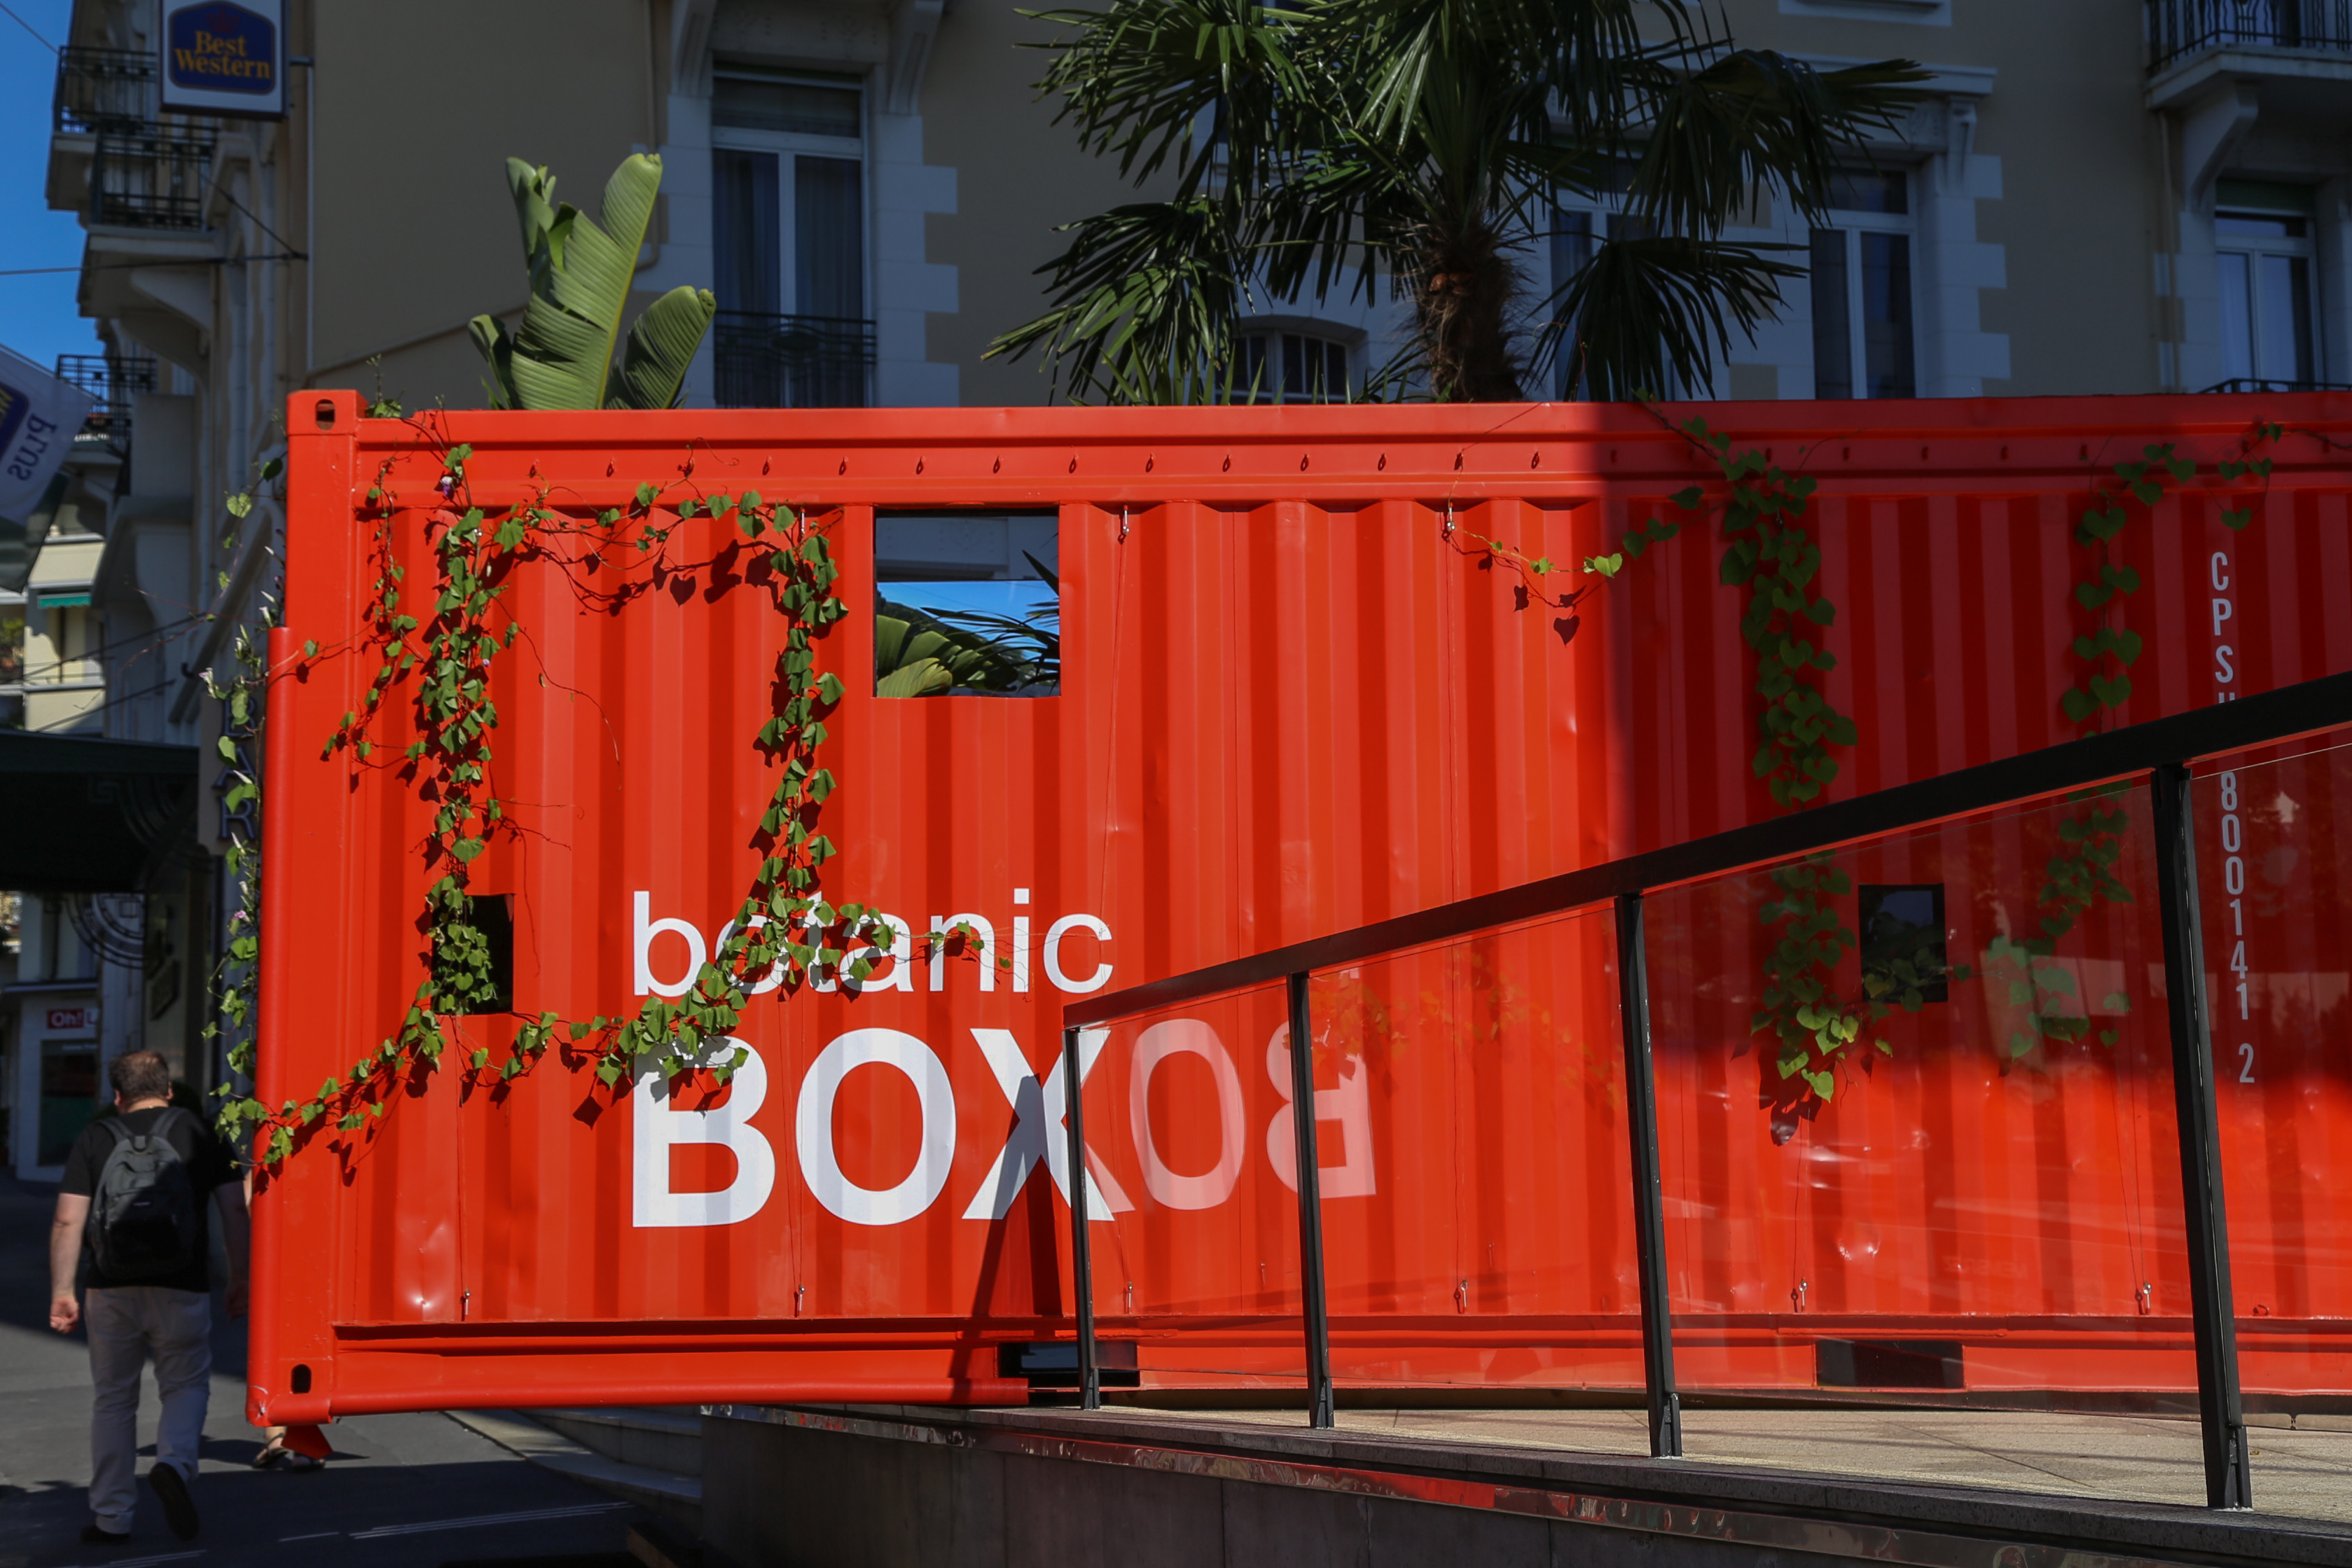 Botanic Box